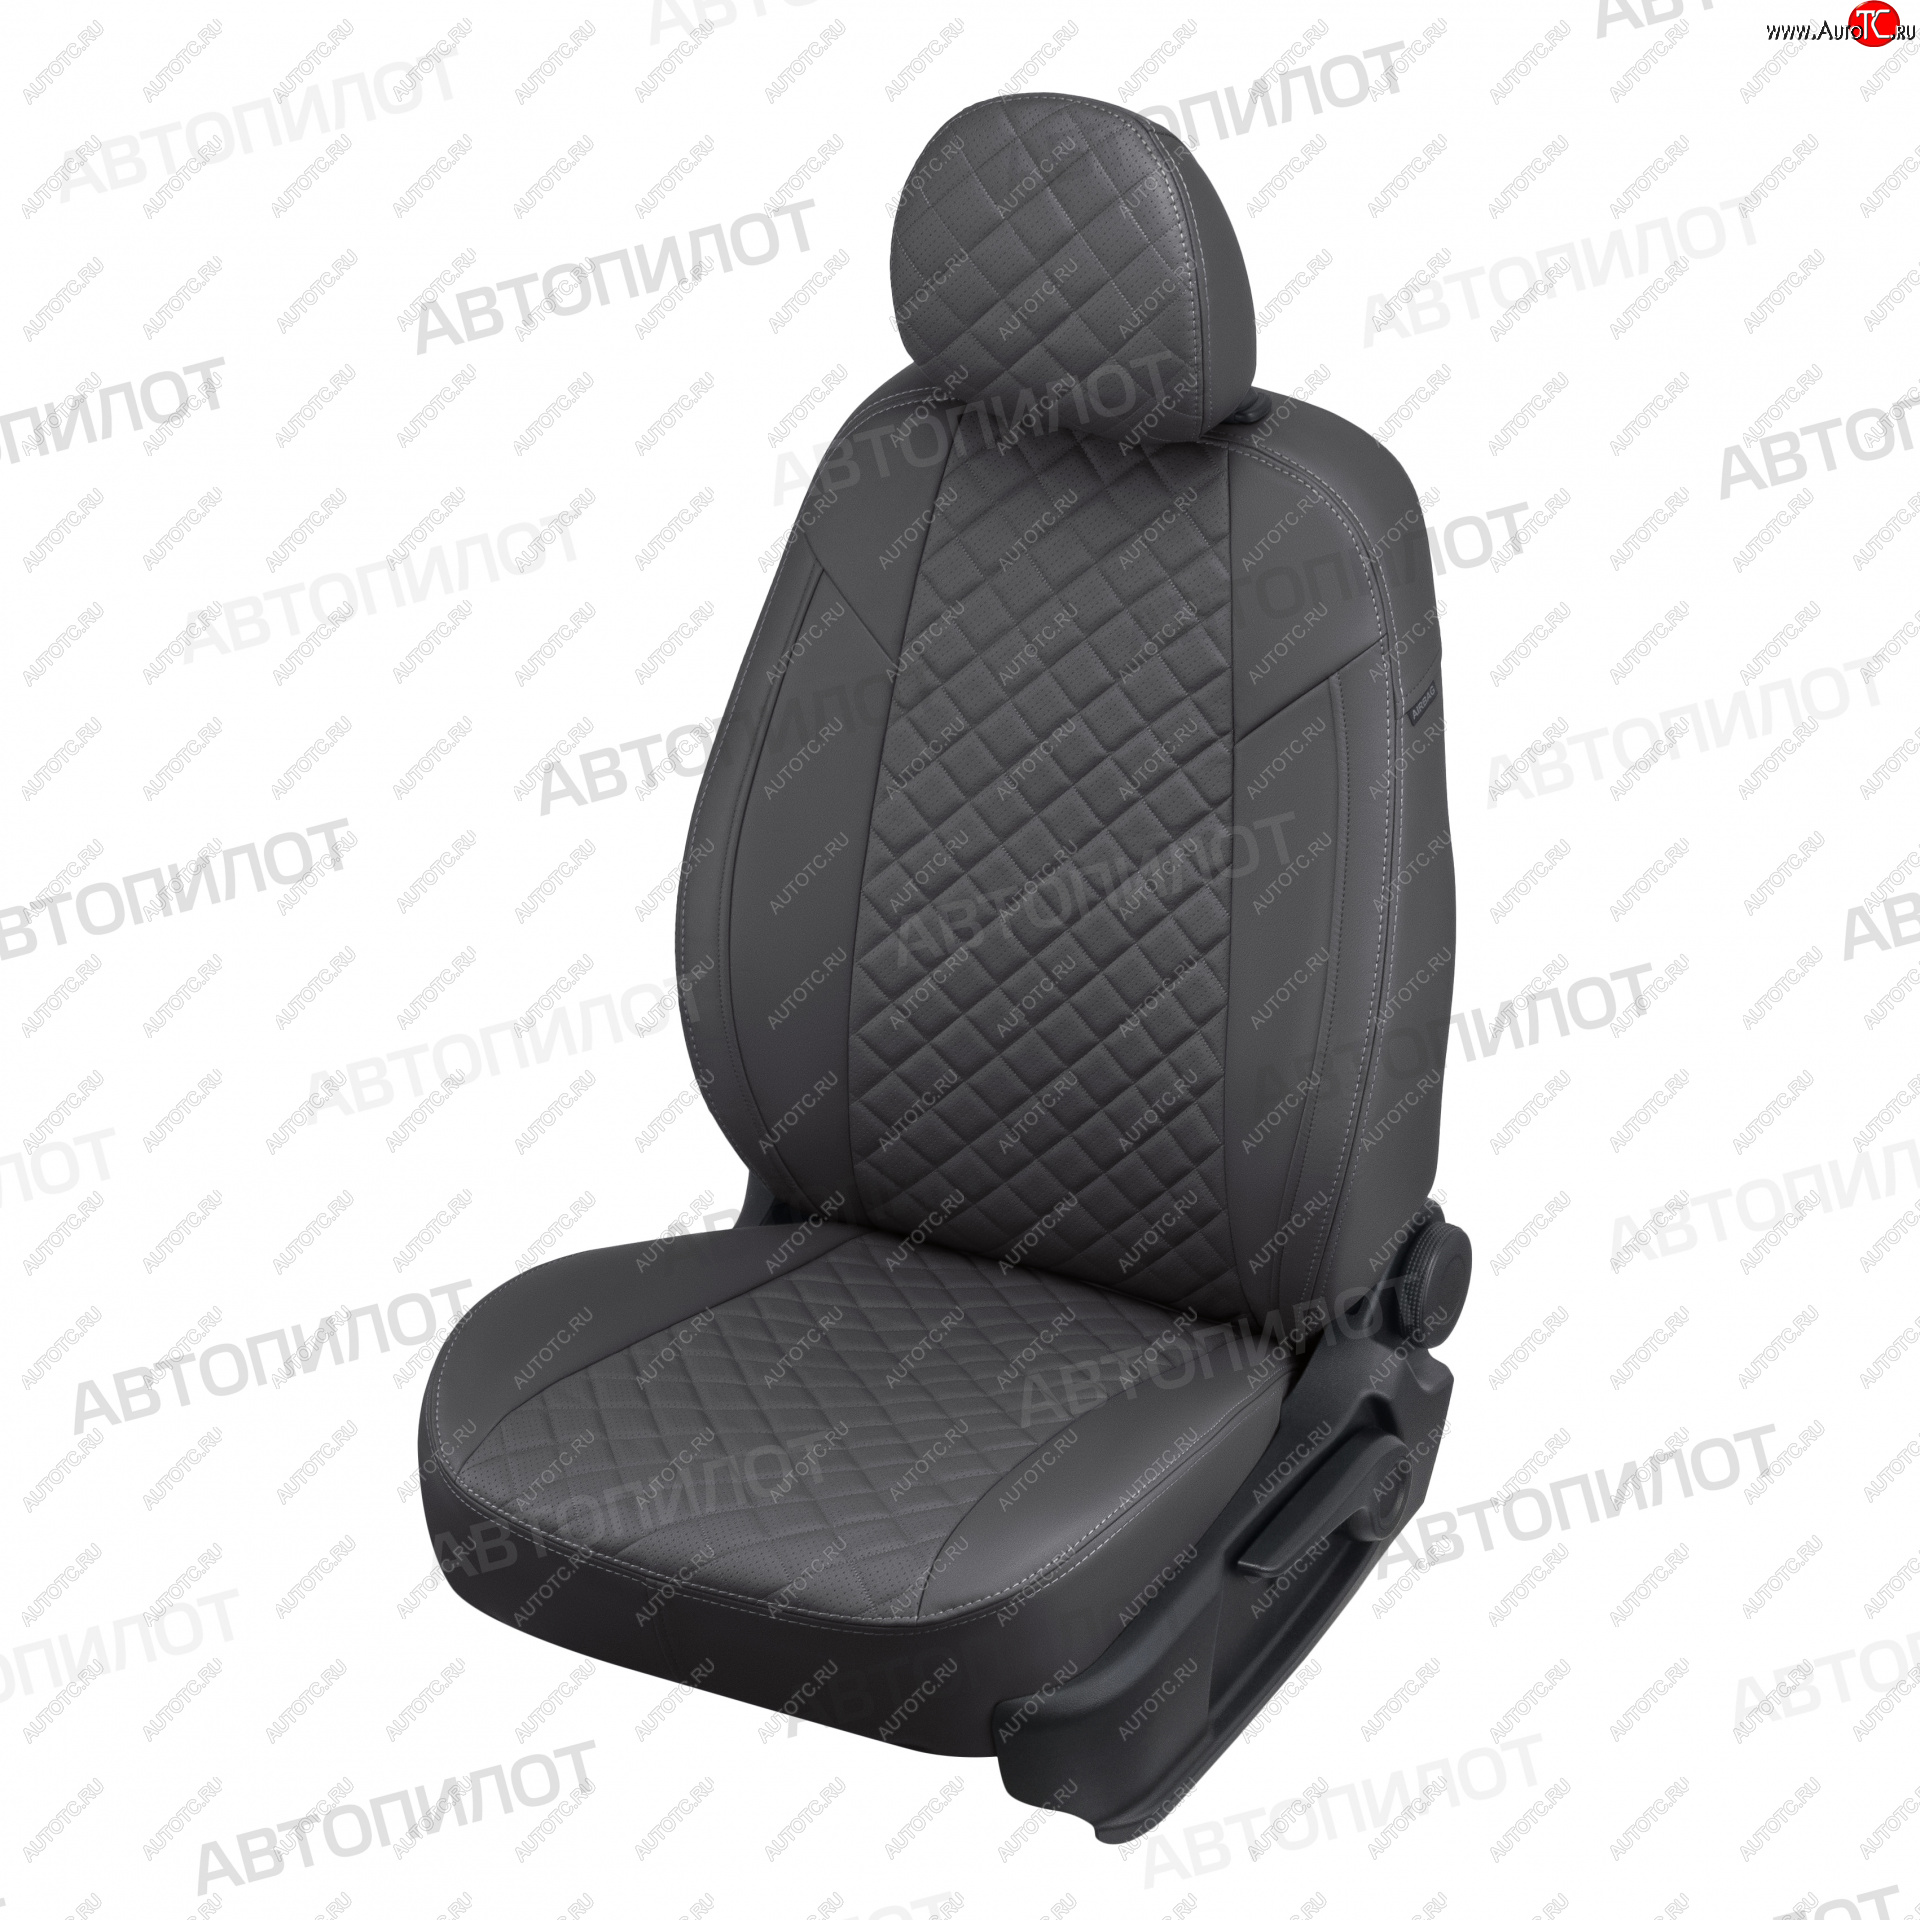 14 499 р. Чехлы сидений (Titanium, экокожа) Автопилот Ромб  Ford Mondeo  MK5 CD391 (2014-2024) (темно-серый)